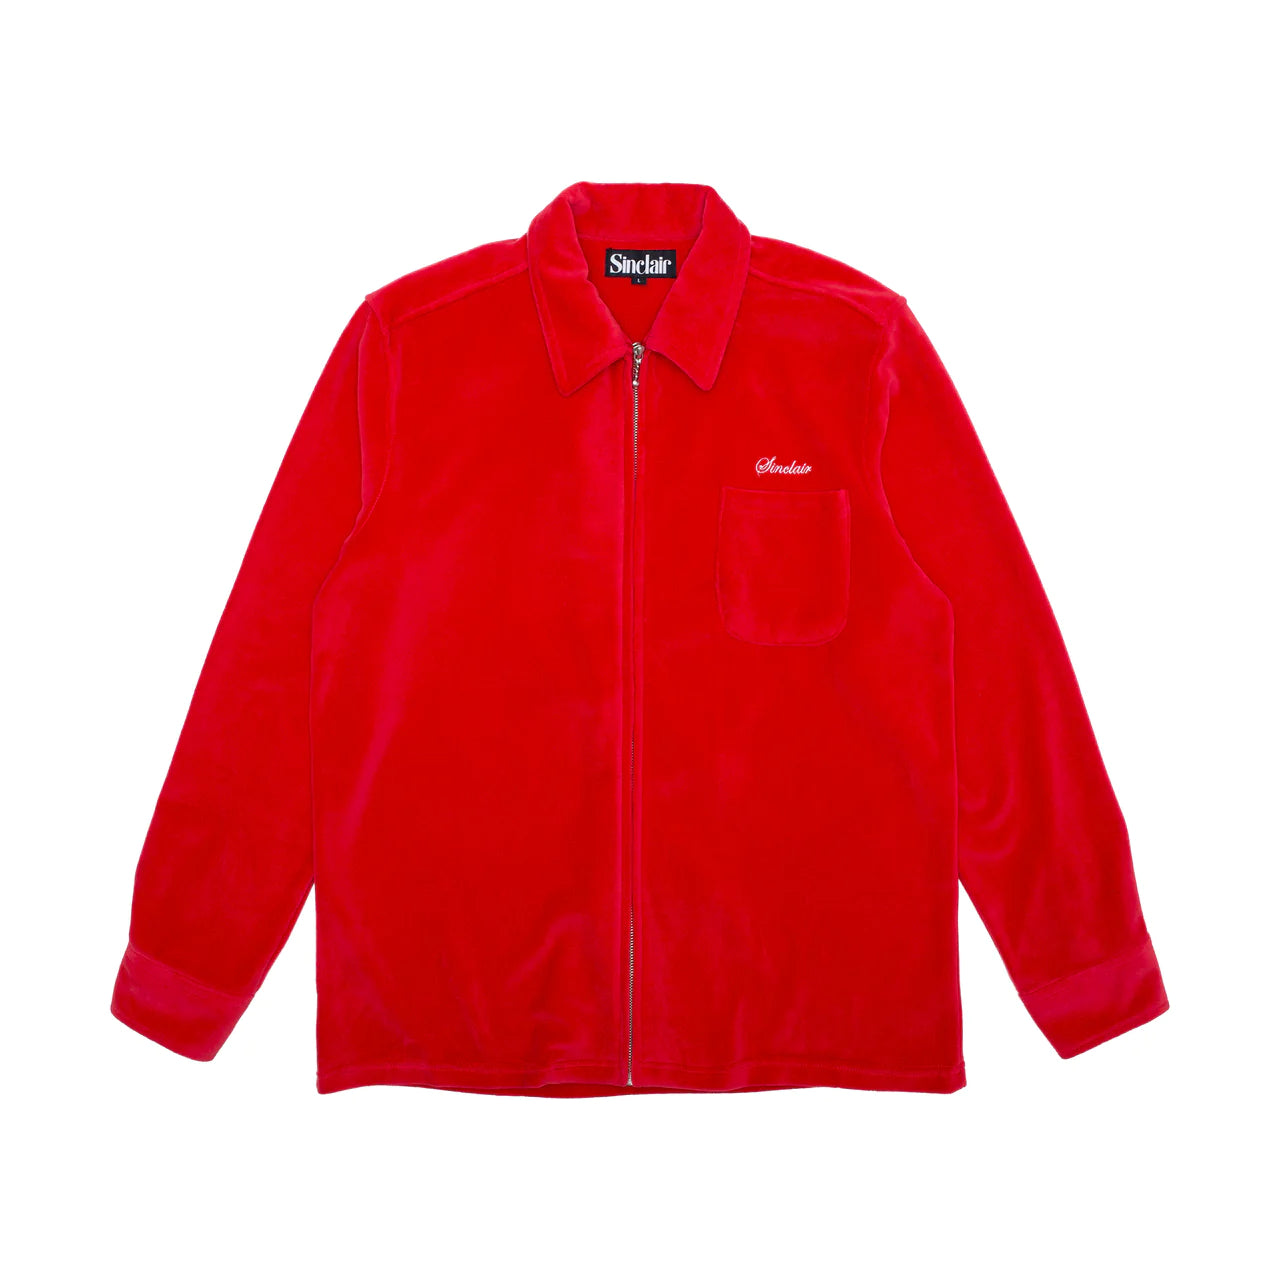 Sinclair Velour Zip Shirt Red